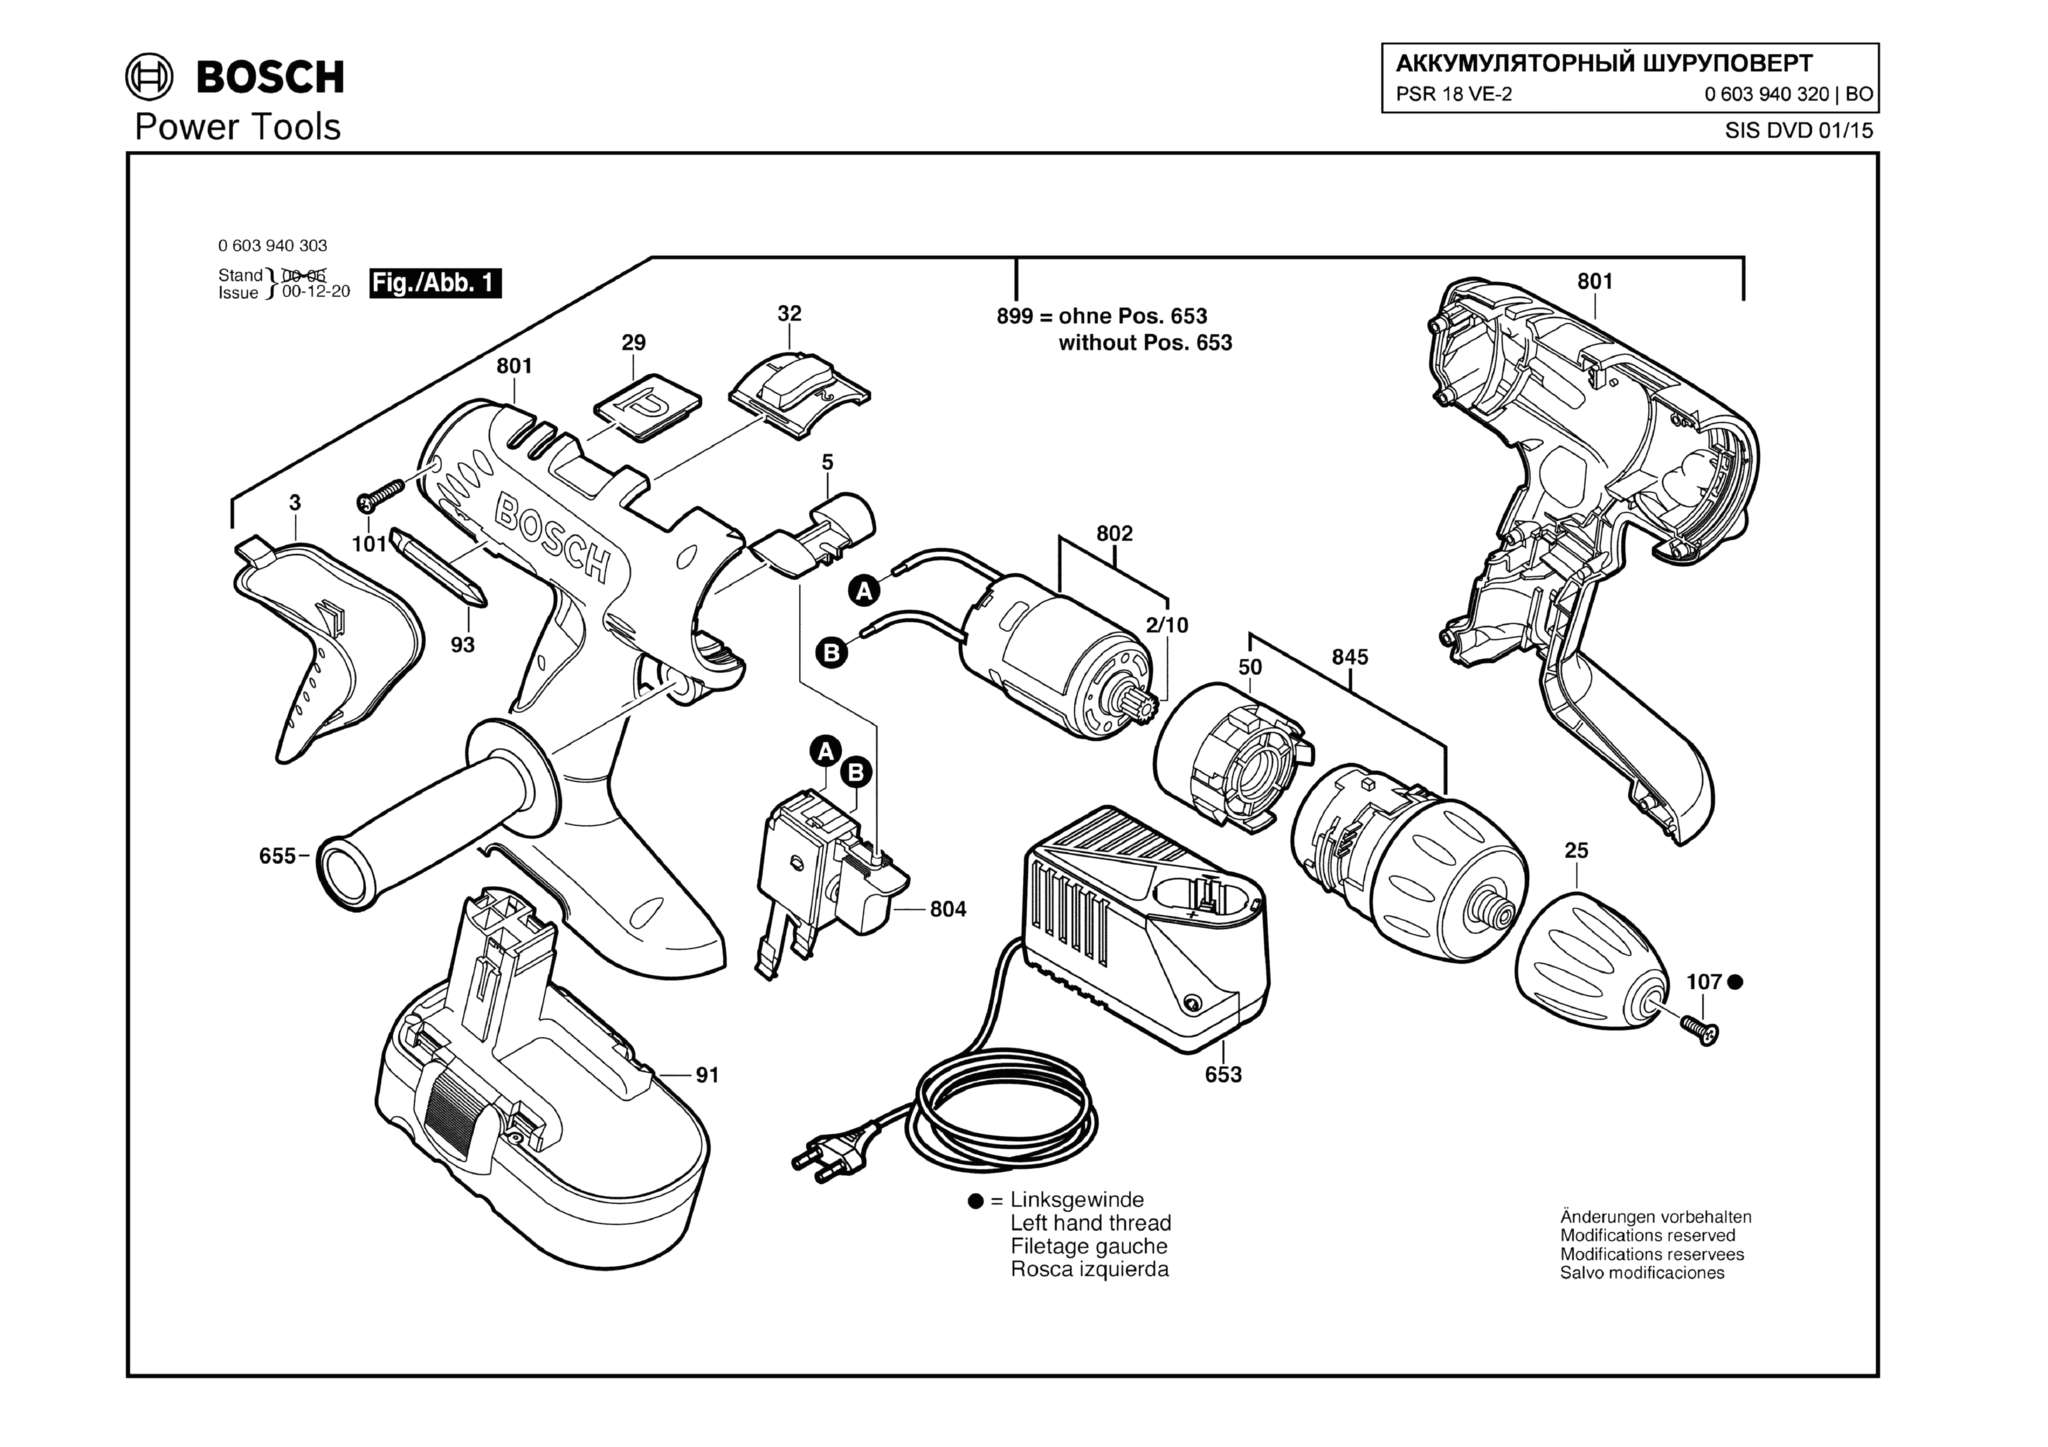 Запчасти, схема и деталировка Bosch PSR 18 VE-2 (ТИП 0603940320)